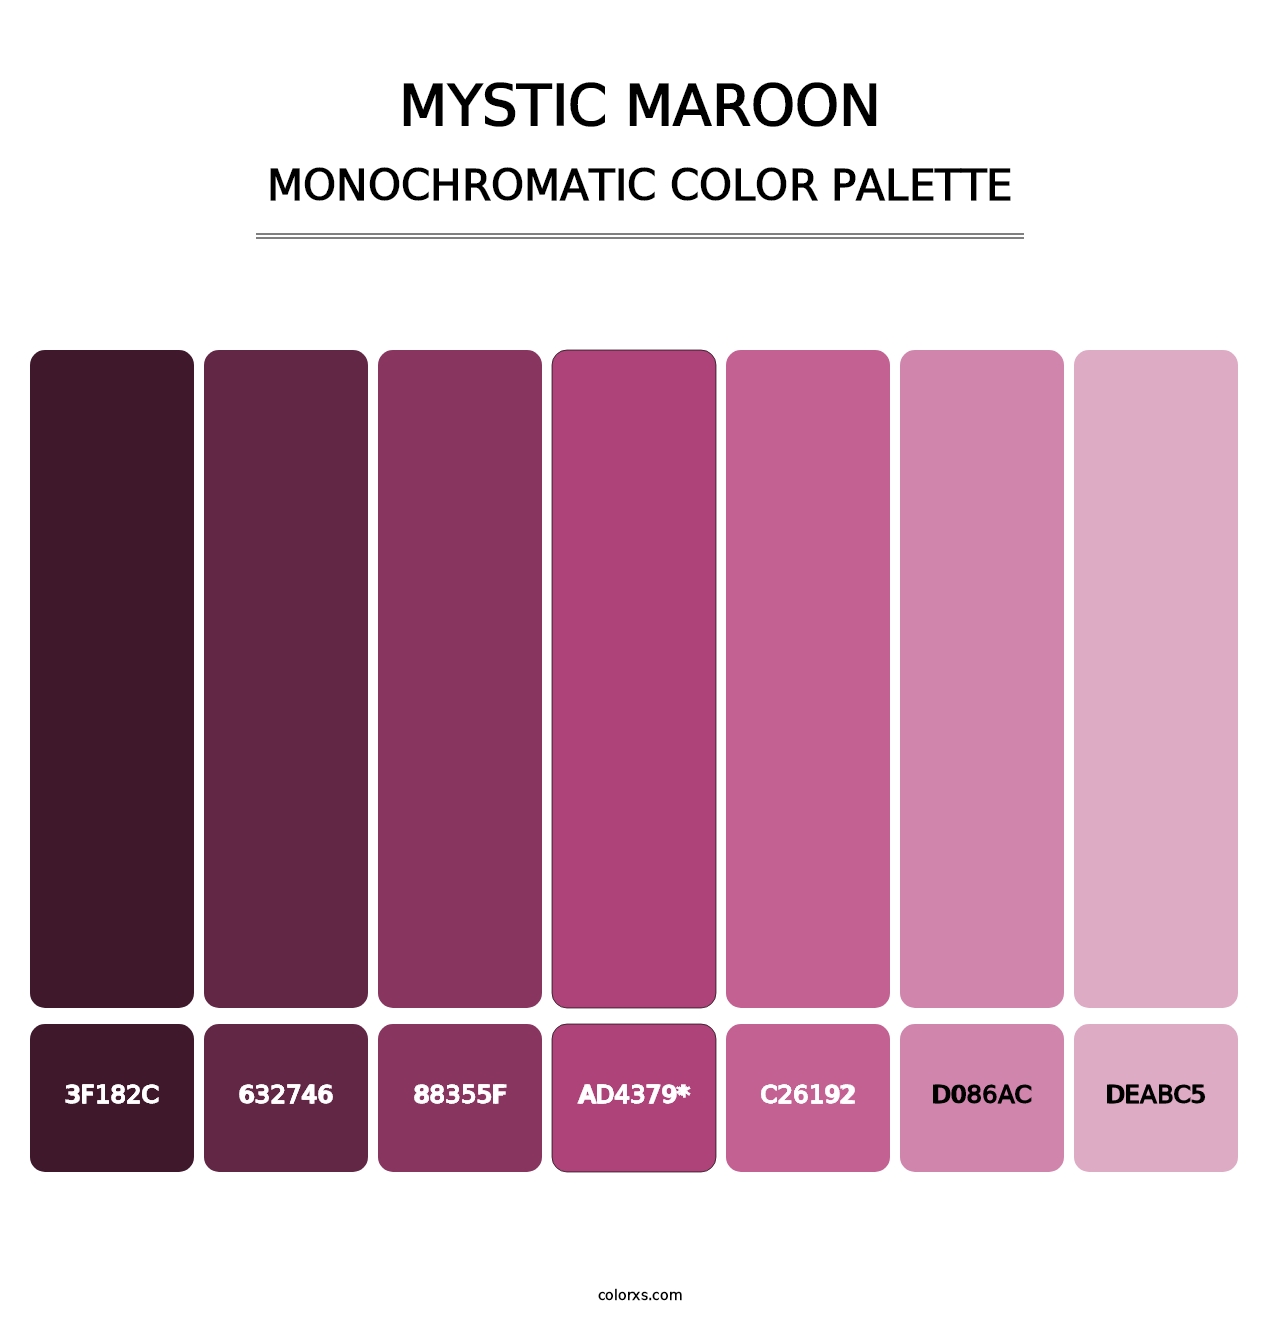 Mystic Maroon - Monochromatic Color Palette